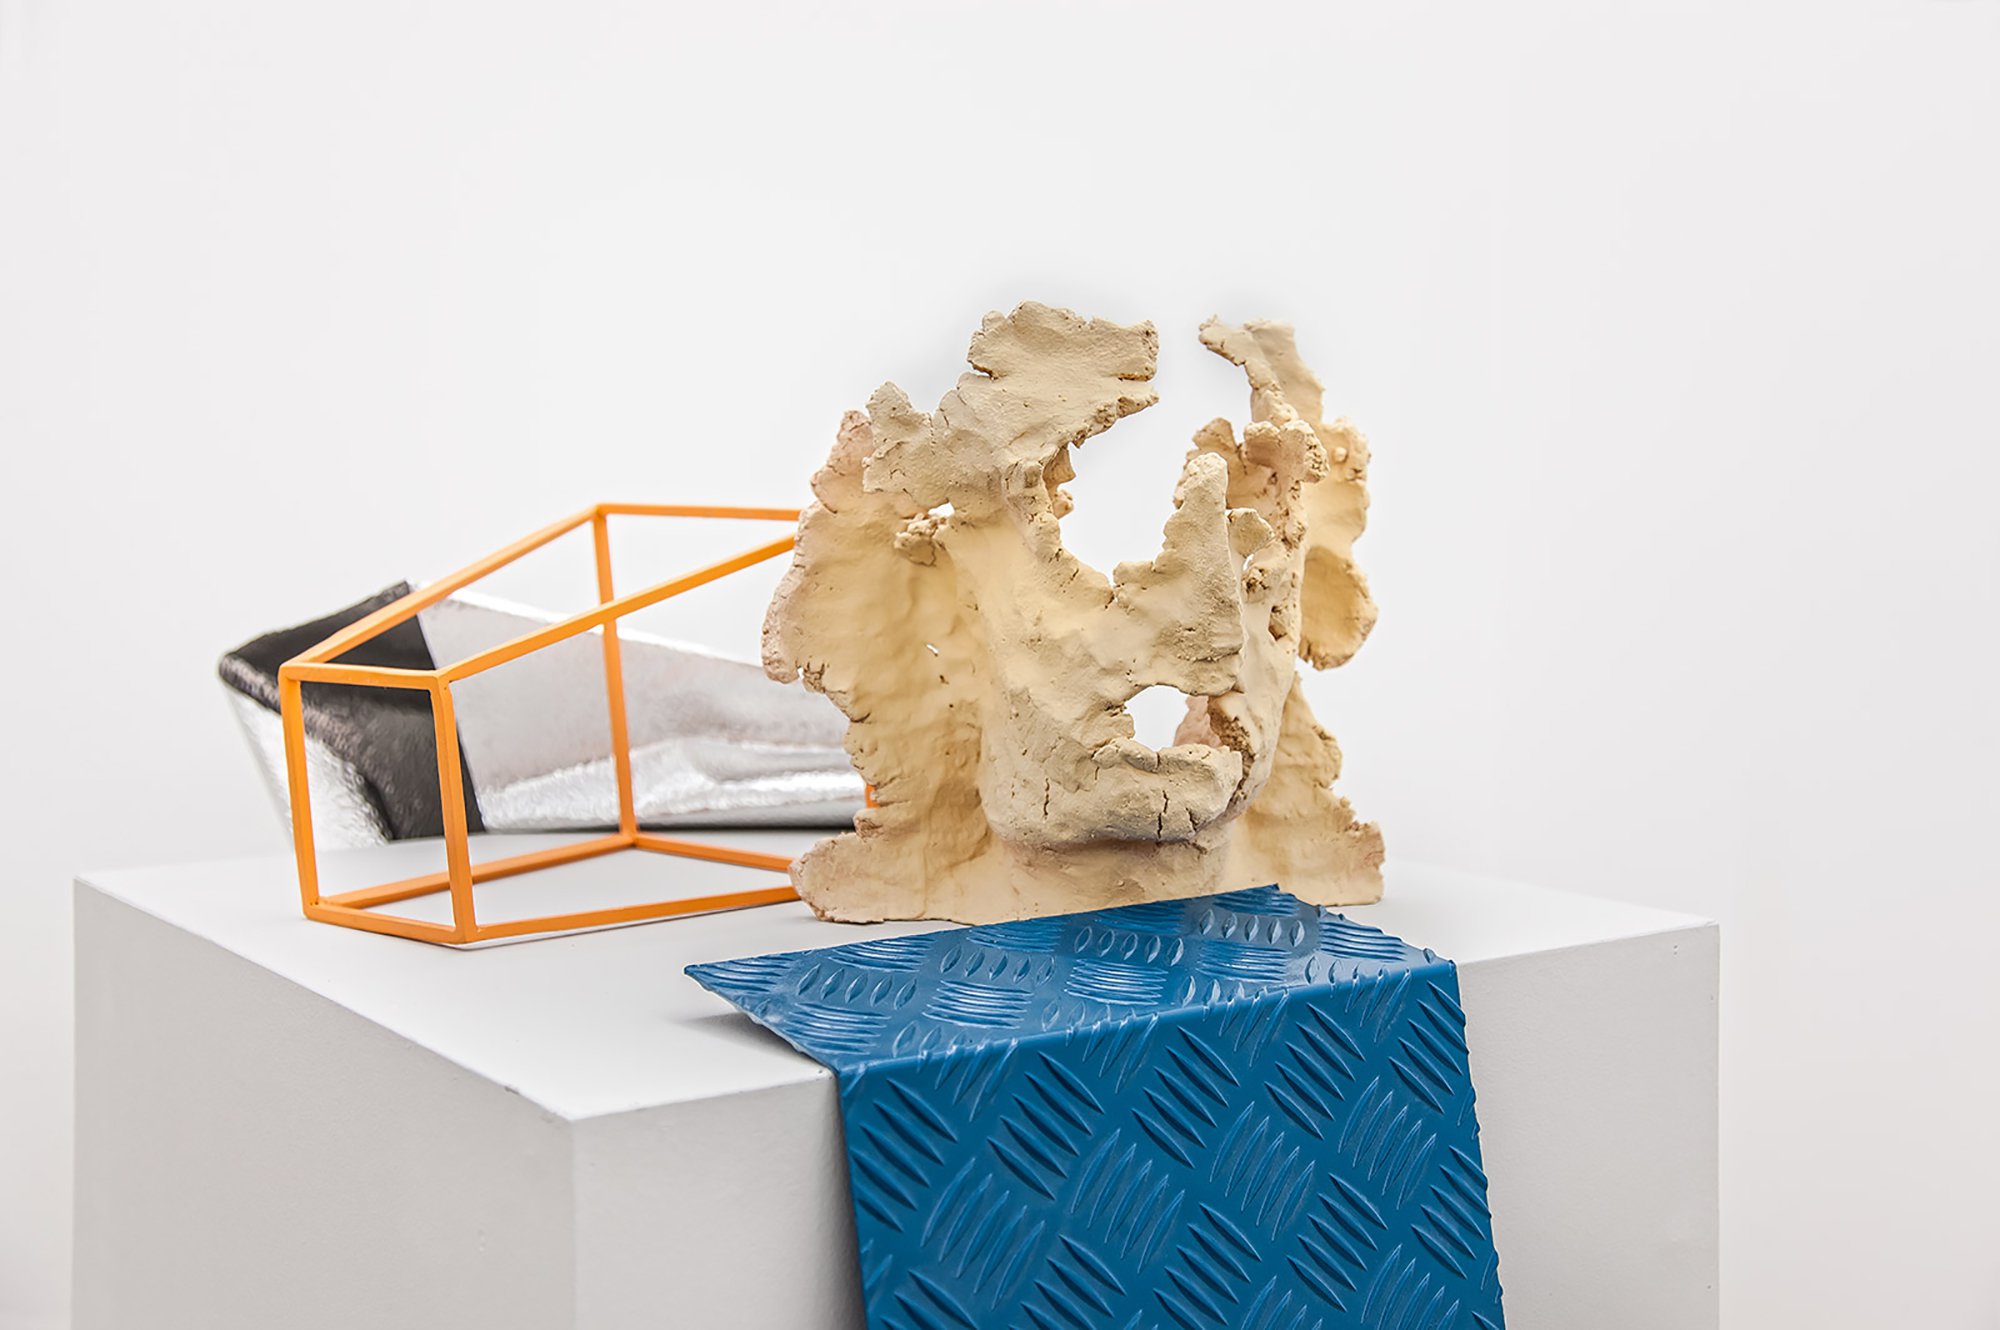 Emre Hüner, Anthropophagy, installation on wooden bases with ceramics, metal elements, dimensions variable, 2013